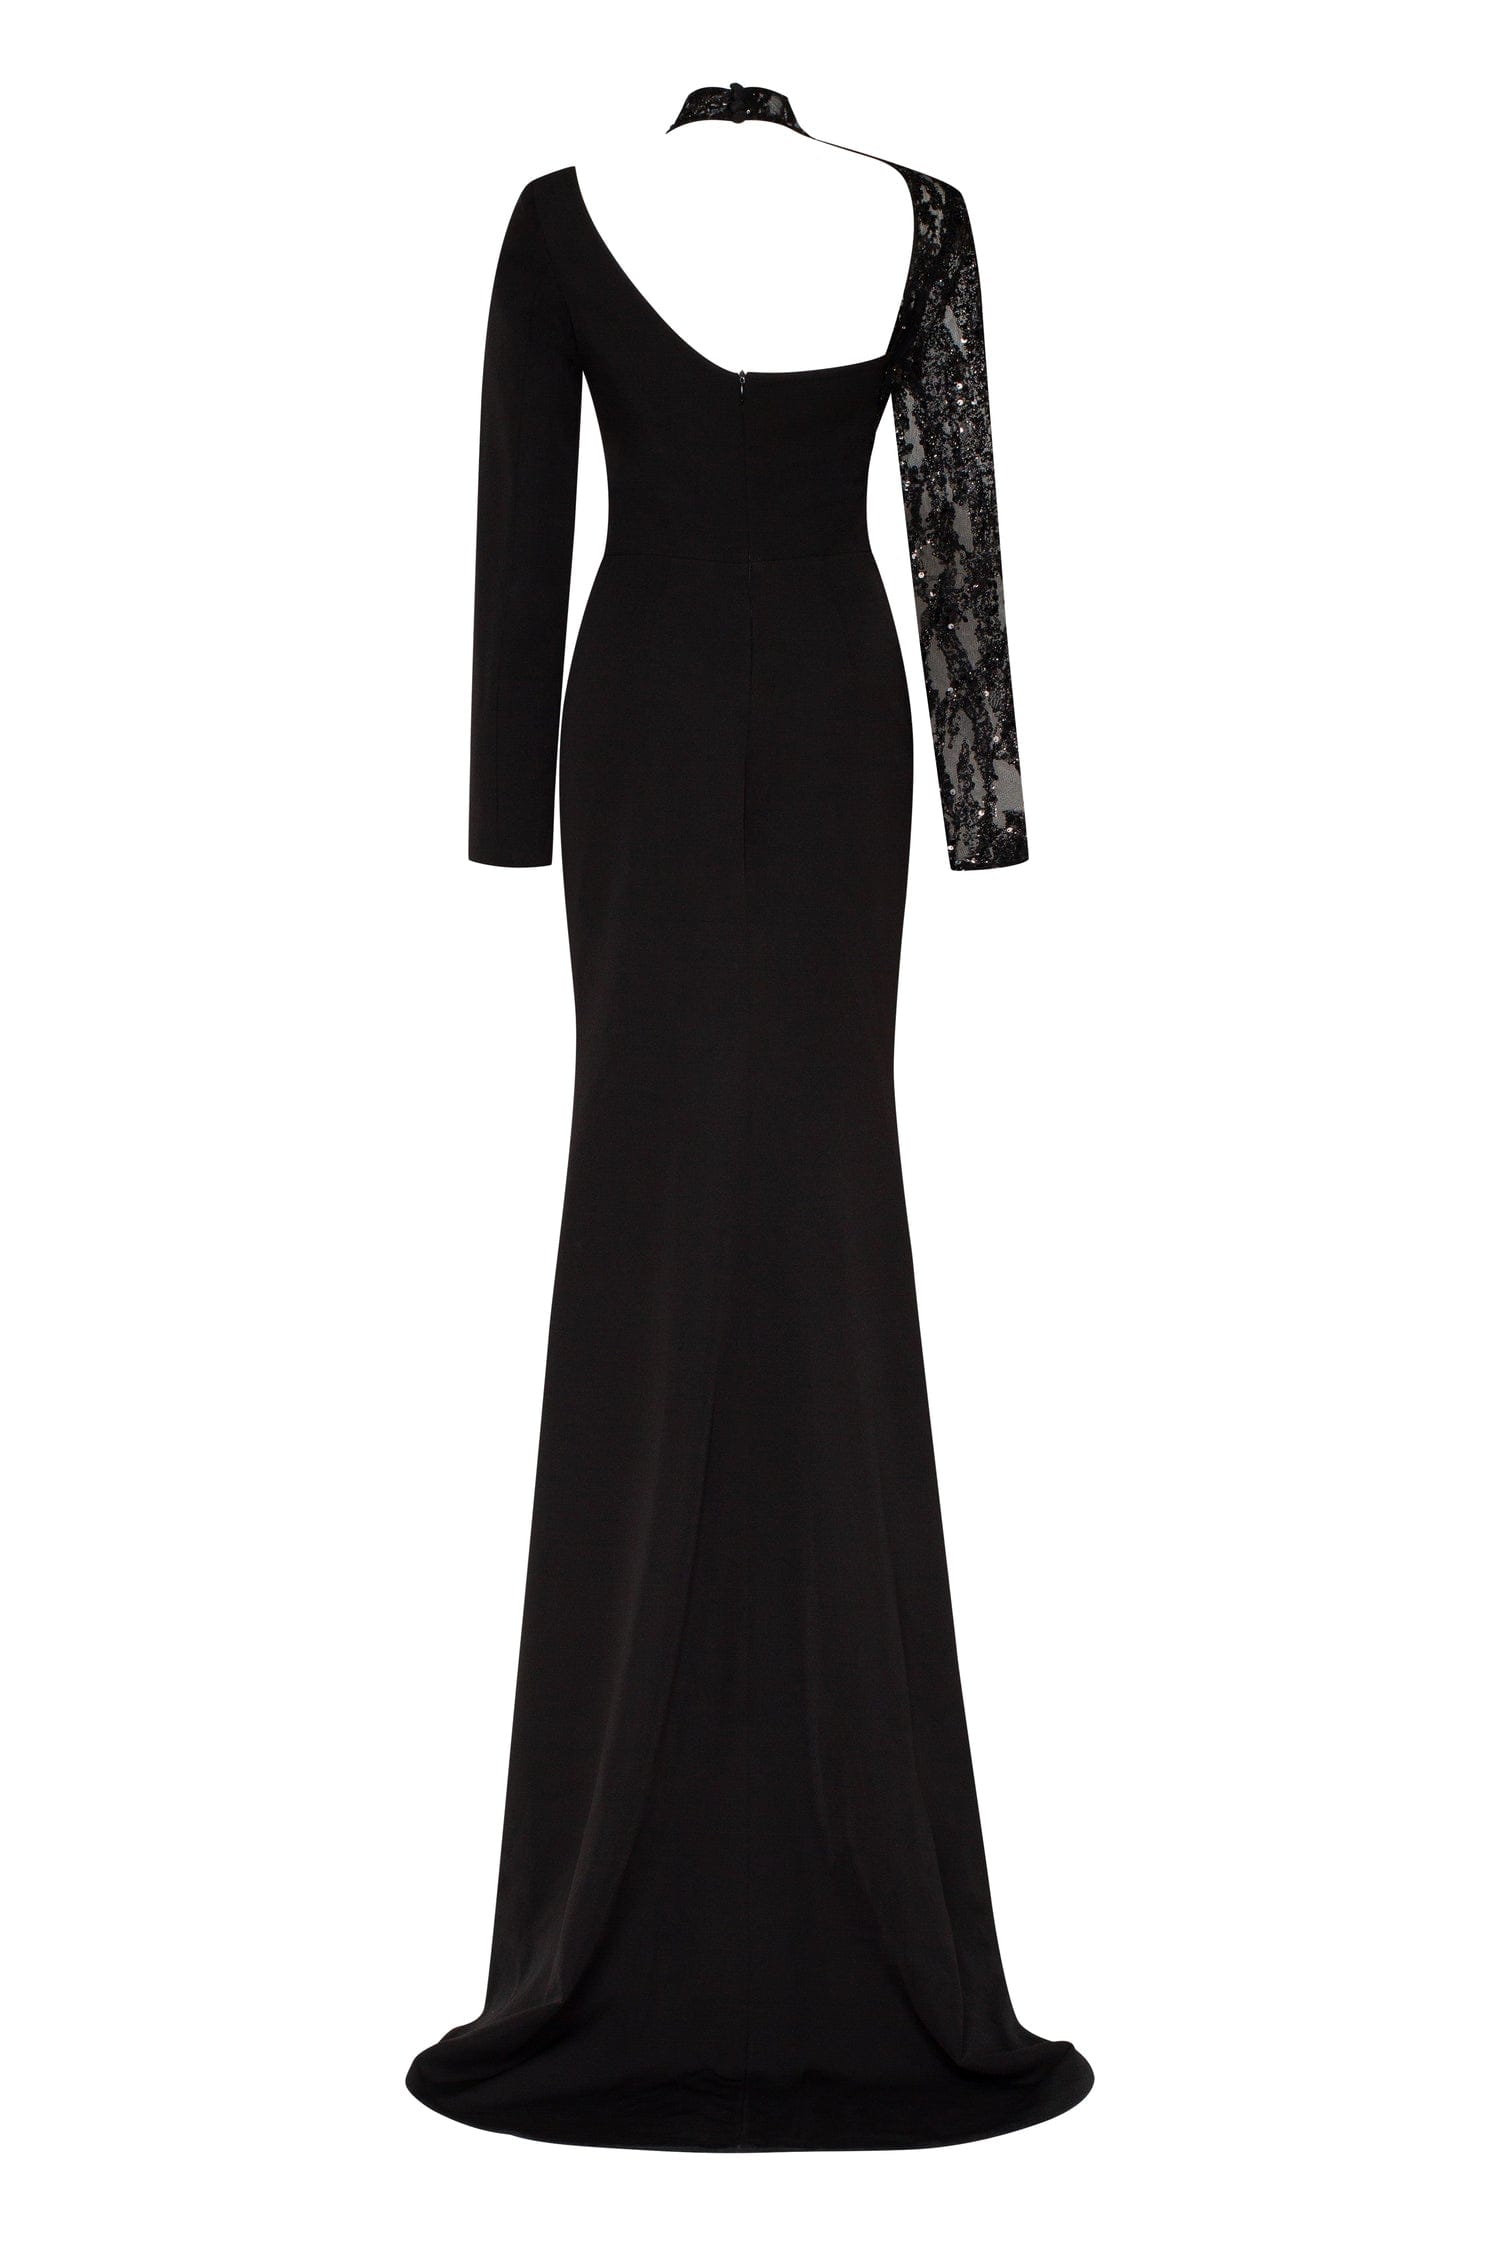 Cute Black Lace Dress - Lace Bodycon Dress - Long Sleeve Dress - Lulus